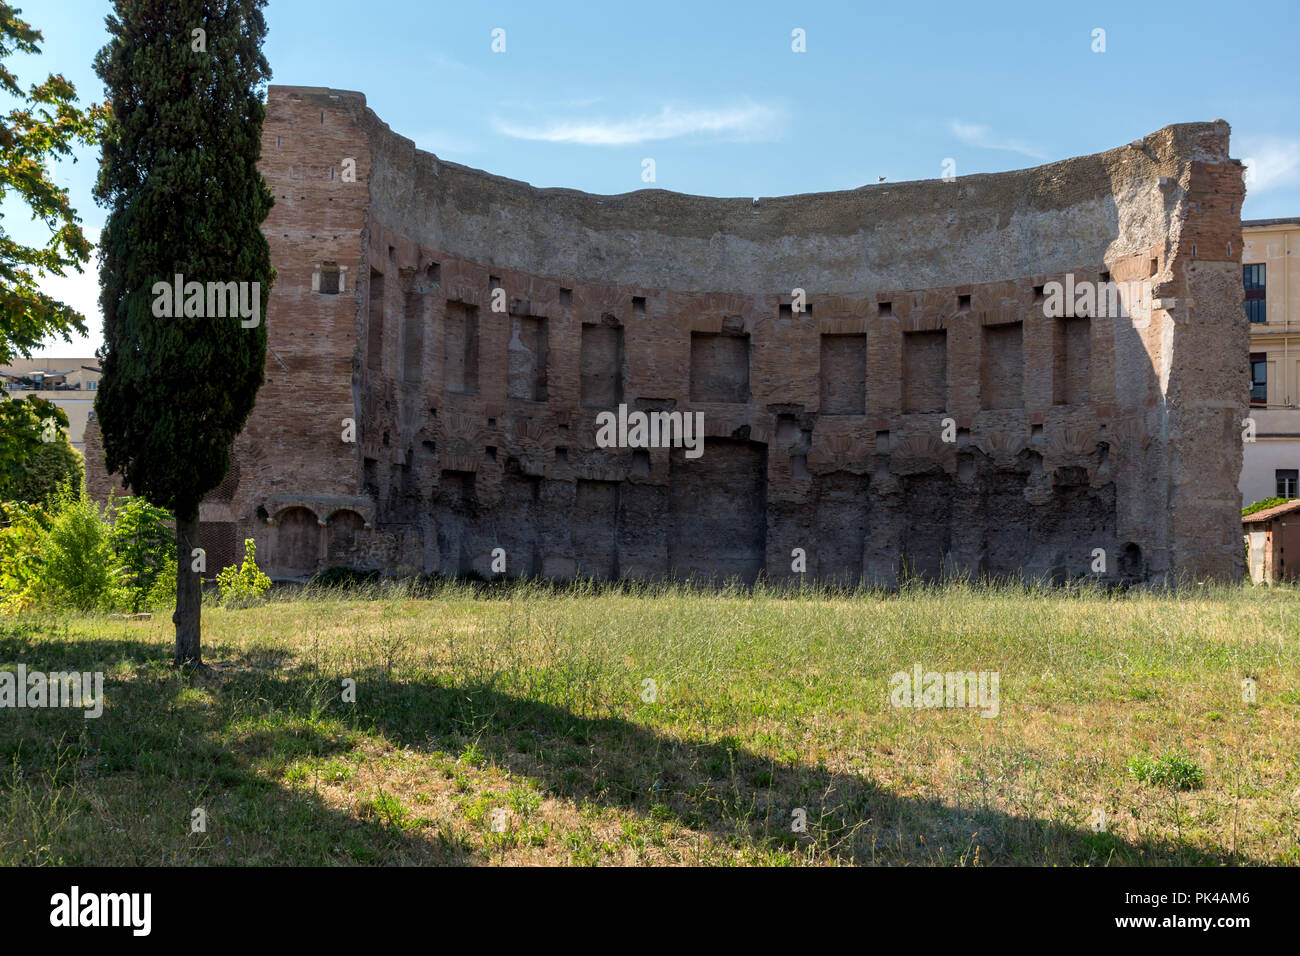 ROME, ITALY - JUNE 23, 2017: Ruins of Domus Aurea in city of Rome, Italy Stock Photo